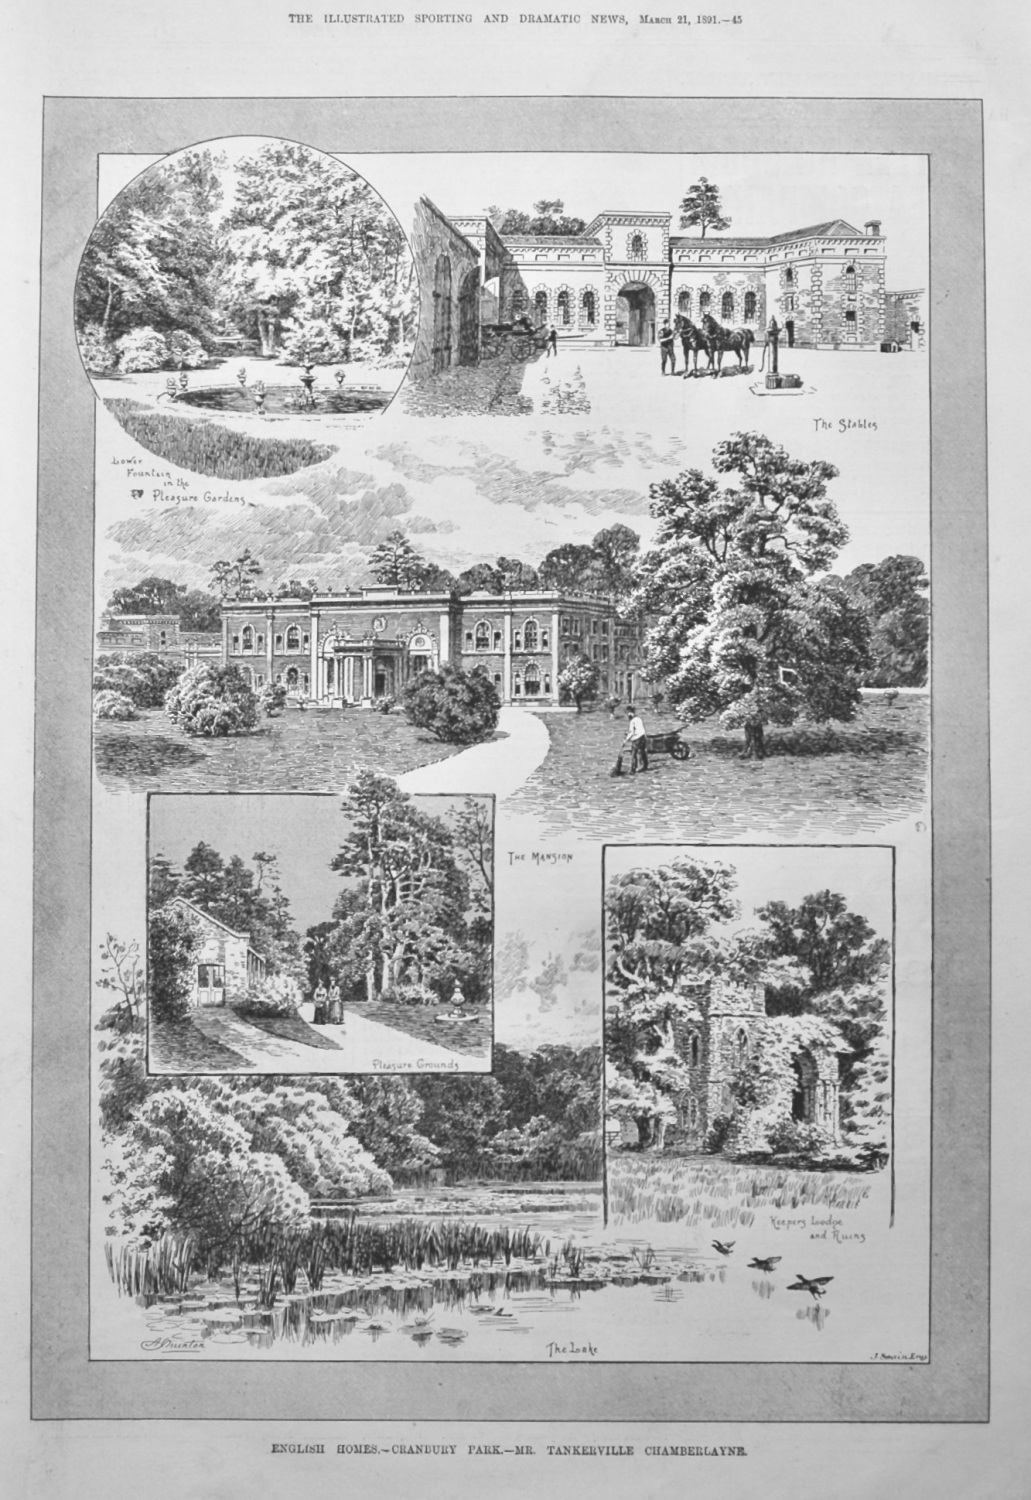 English Homes.- Cranberry Park.- Mr. Tankerville Chamberlayne.  1891.